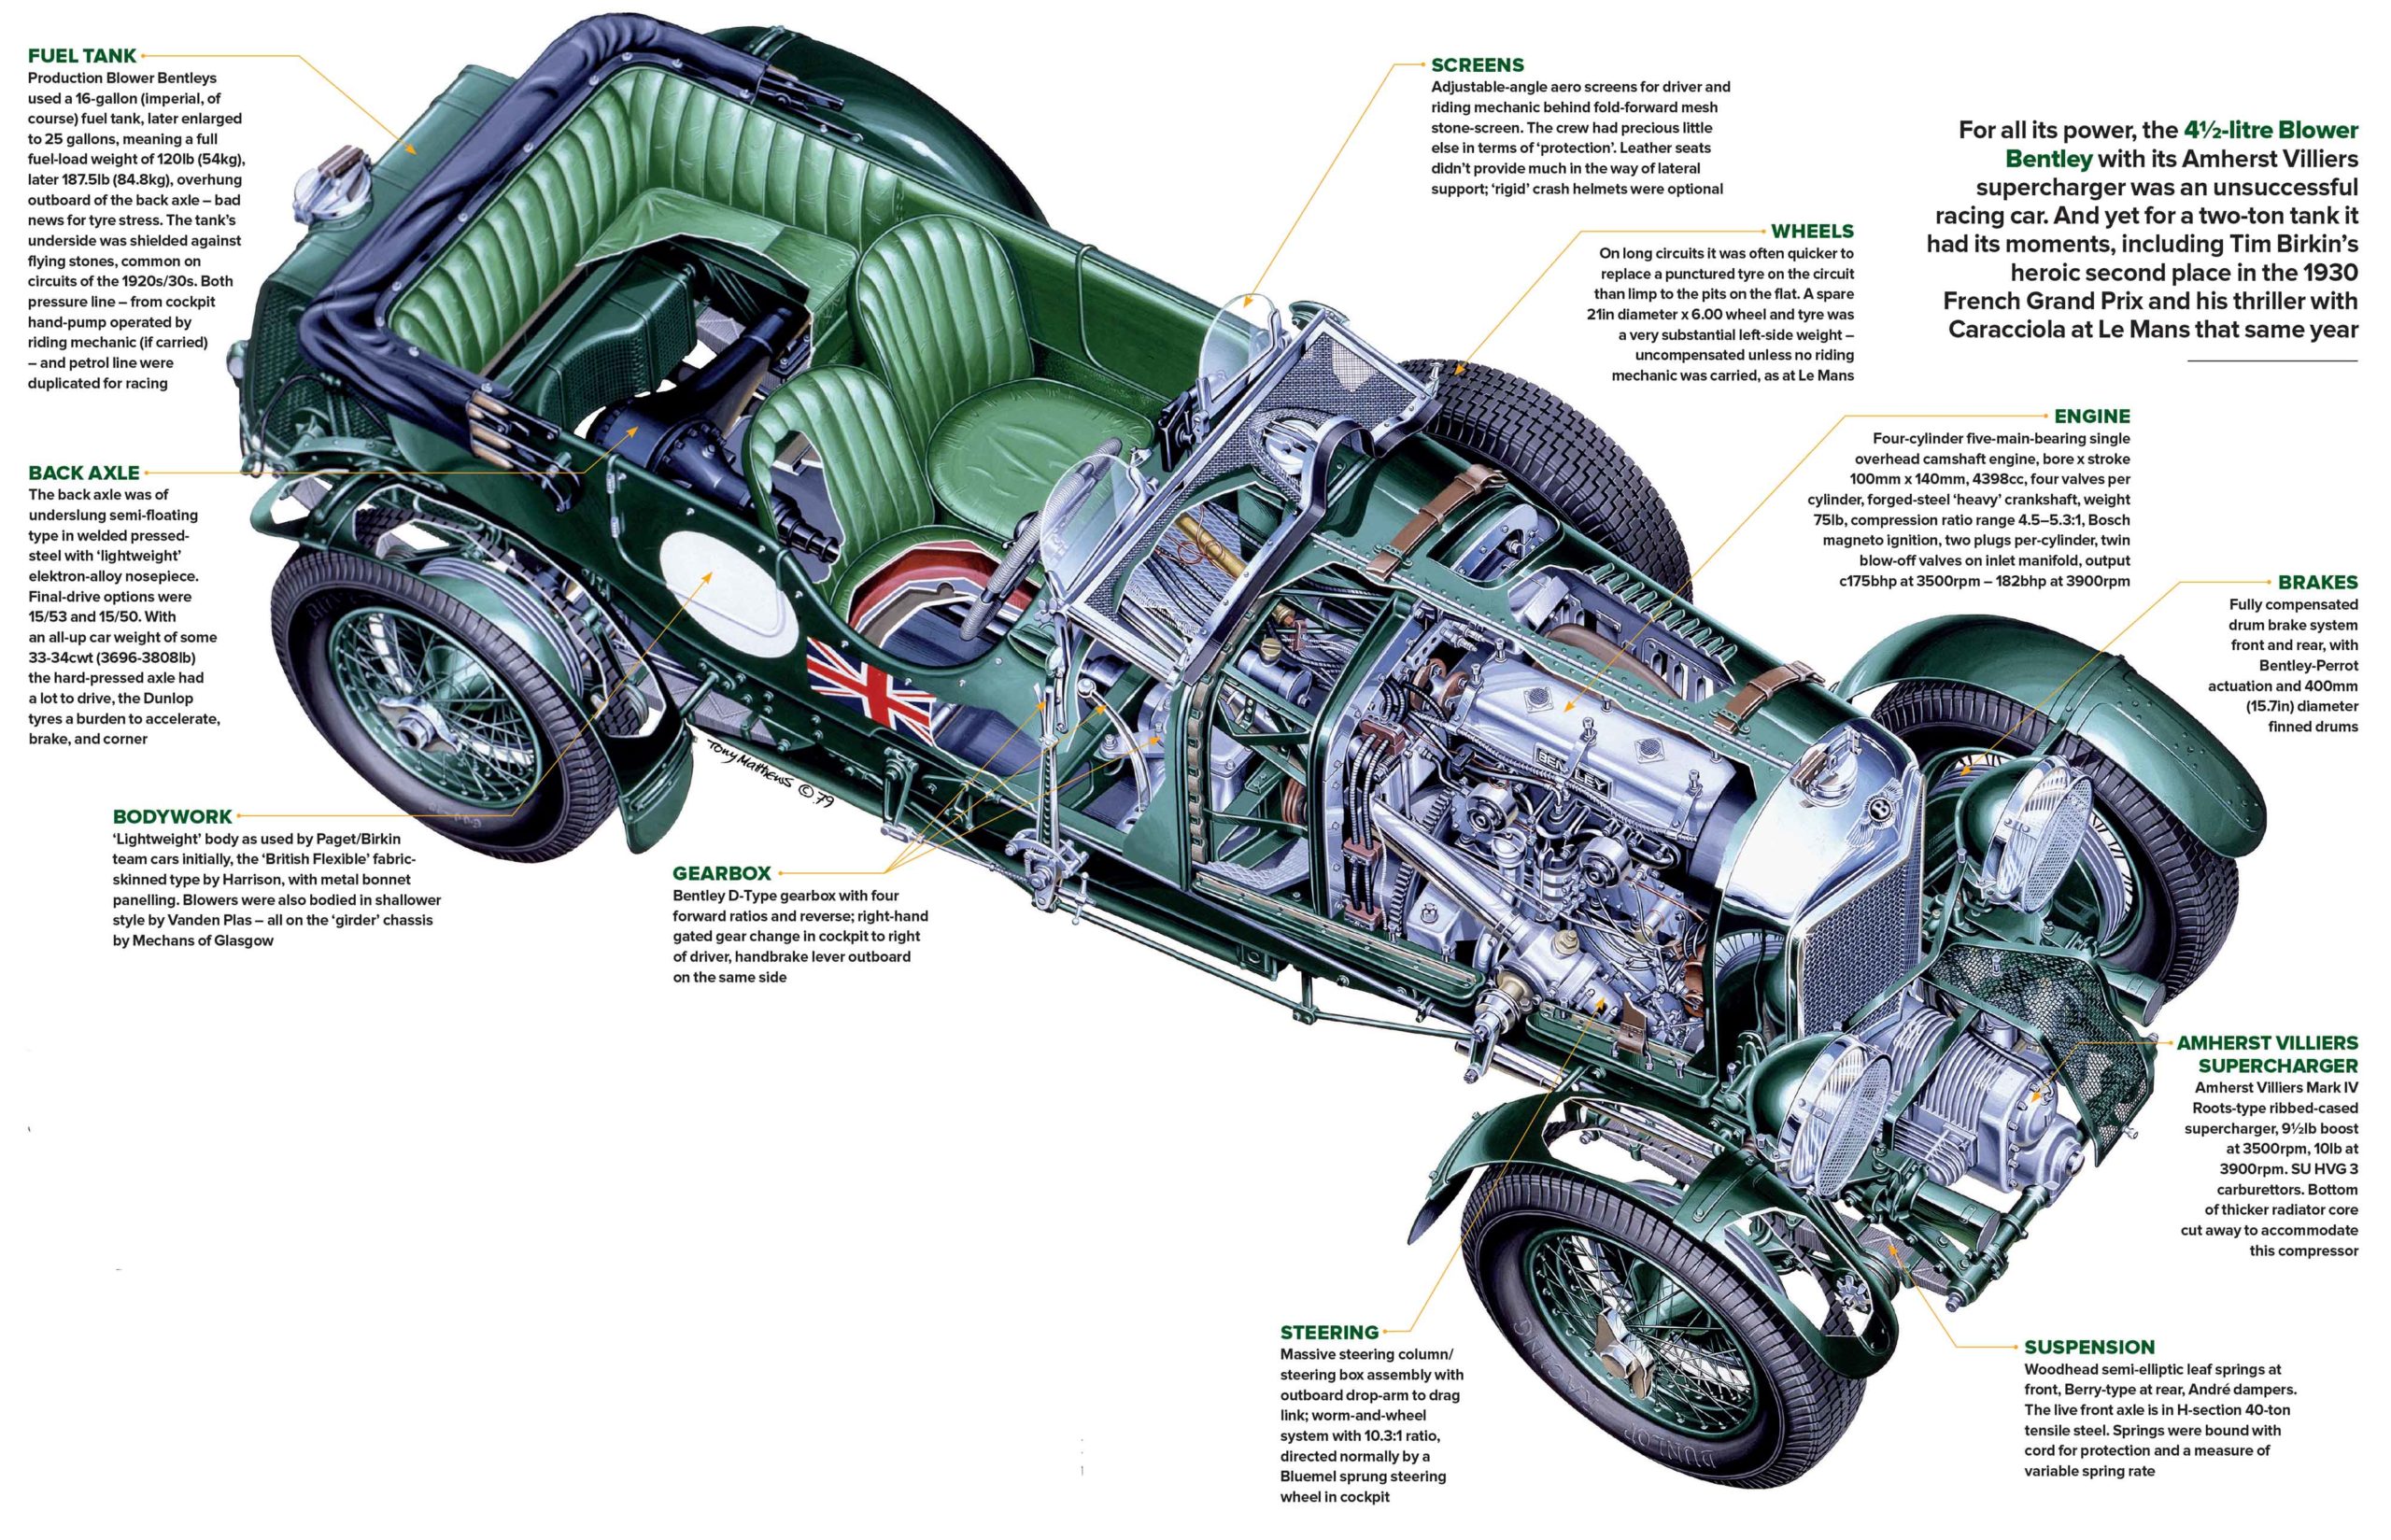 Blower Bentley cutaway